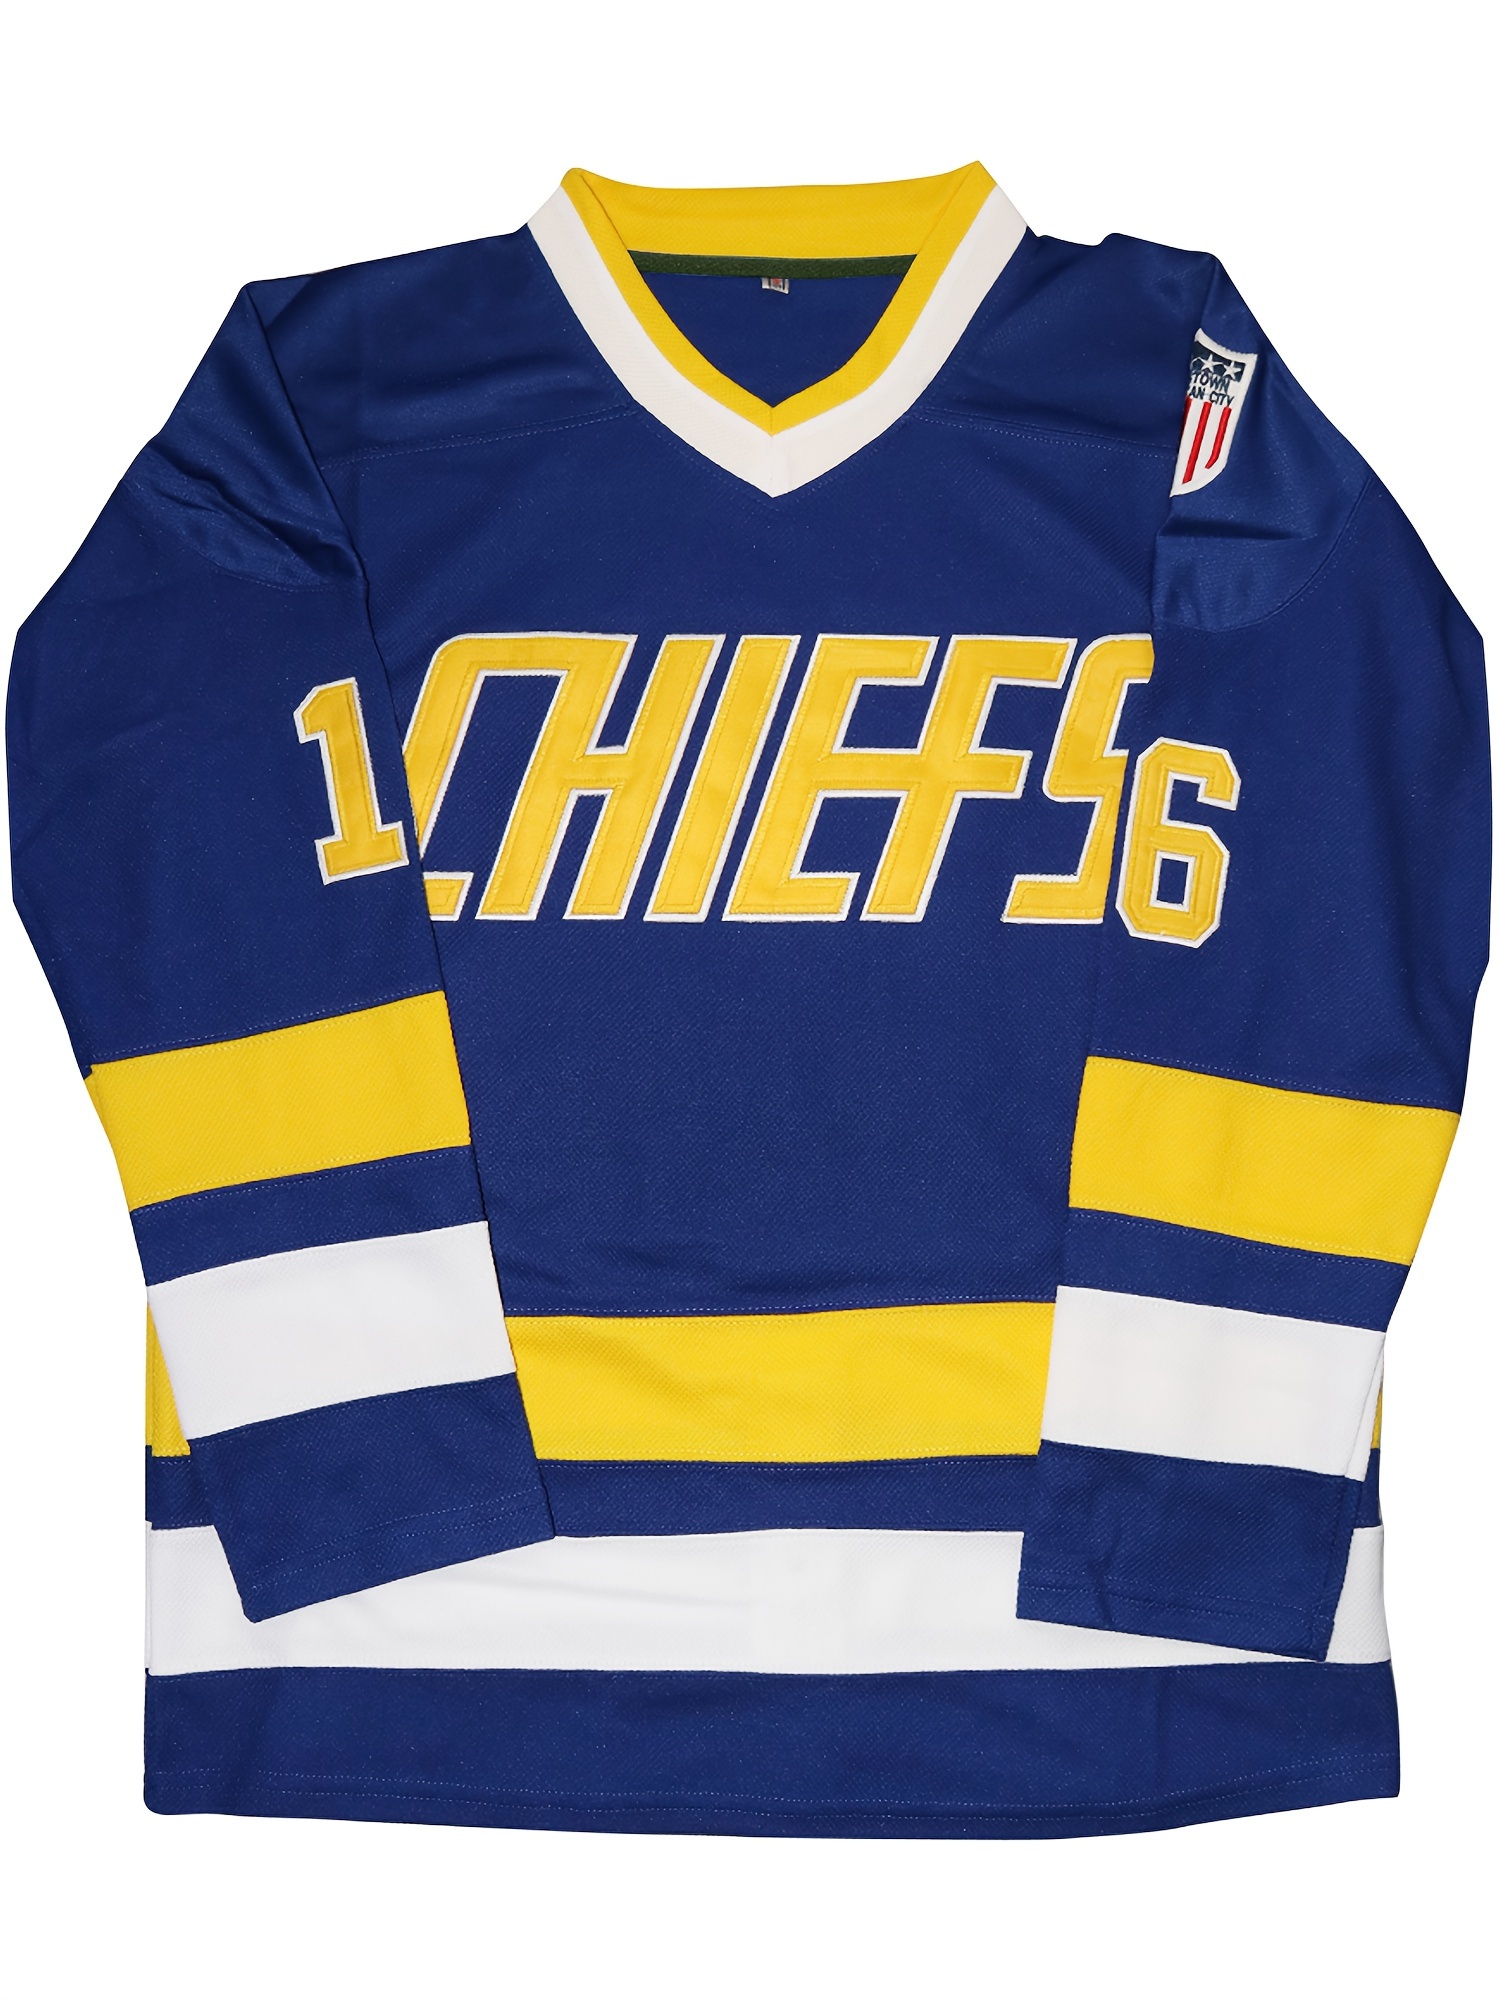 Mens Black #69 Shoresy Letterkenny Ice Hockey Jerseys Christmas Series  Embroidered Stitched Sweatshirt S-XXXL